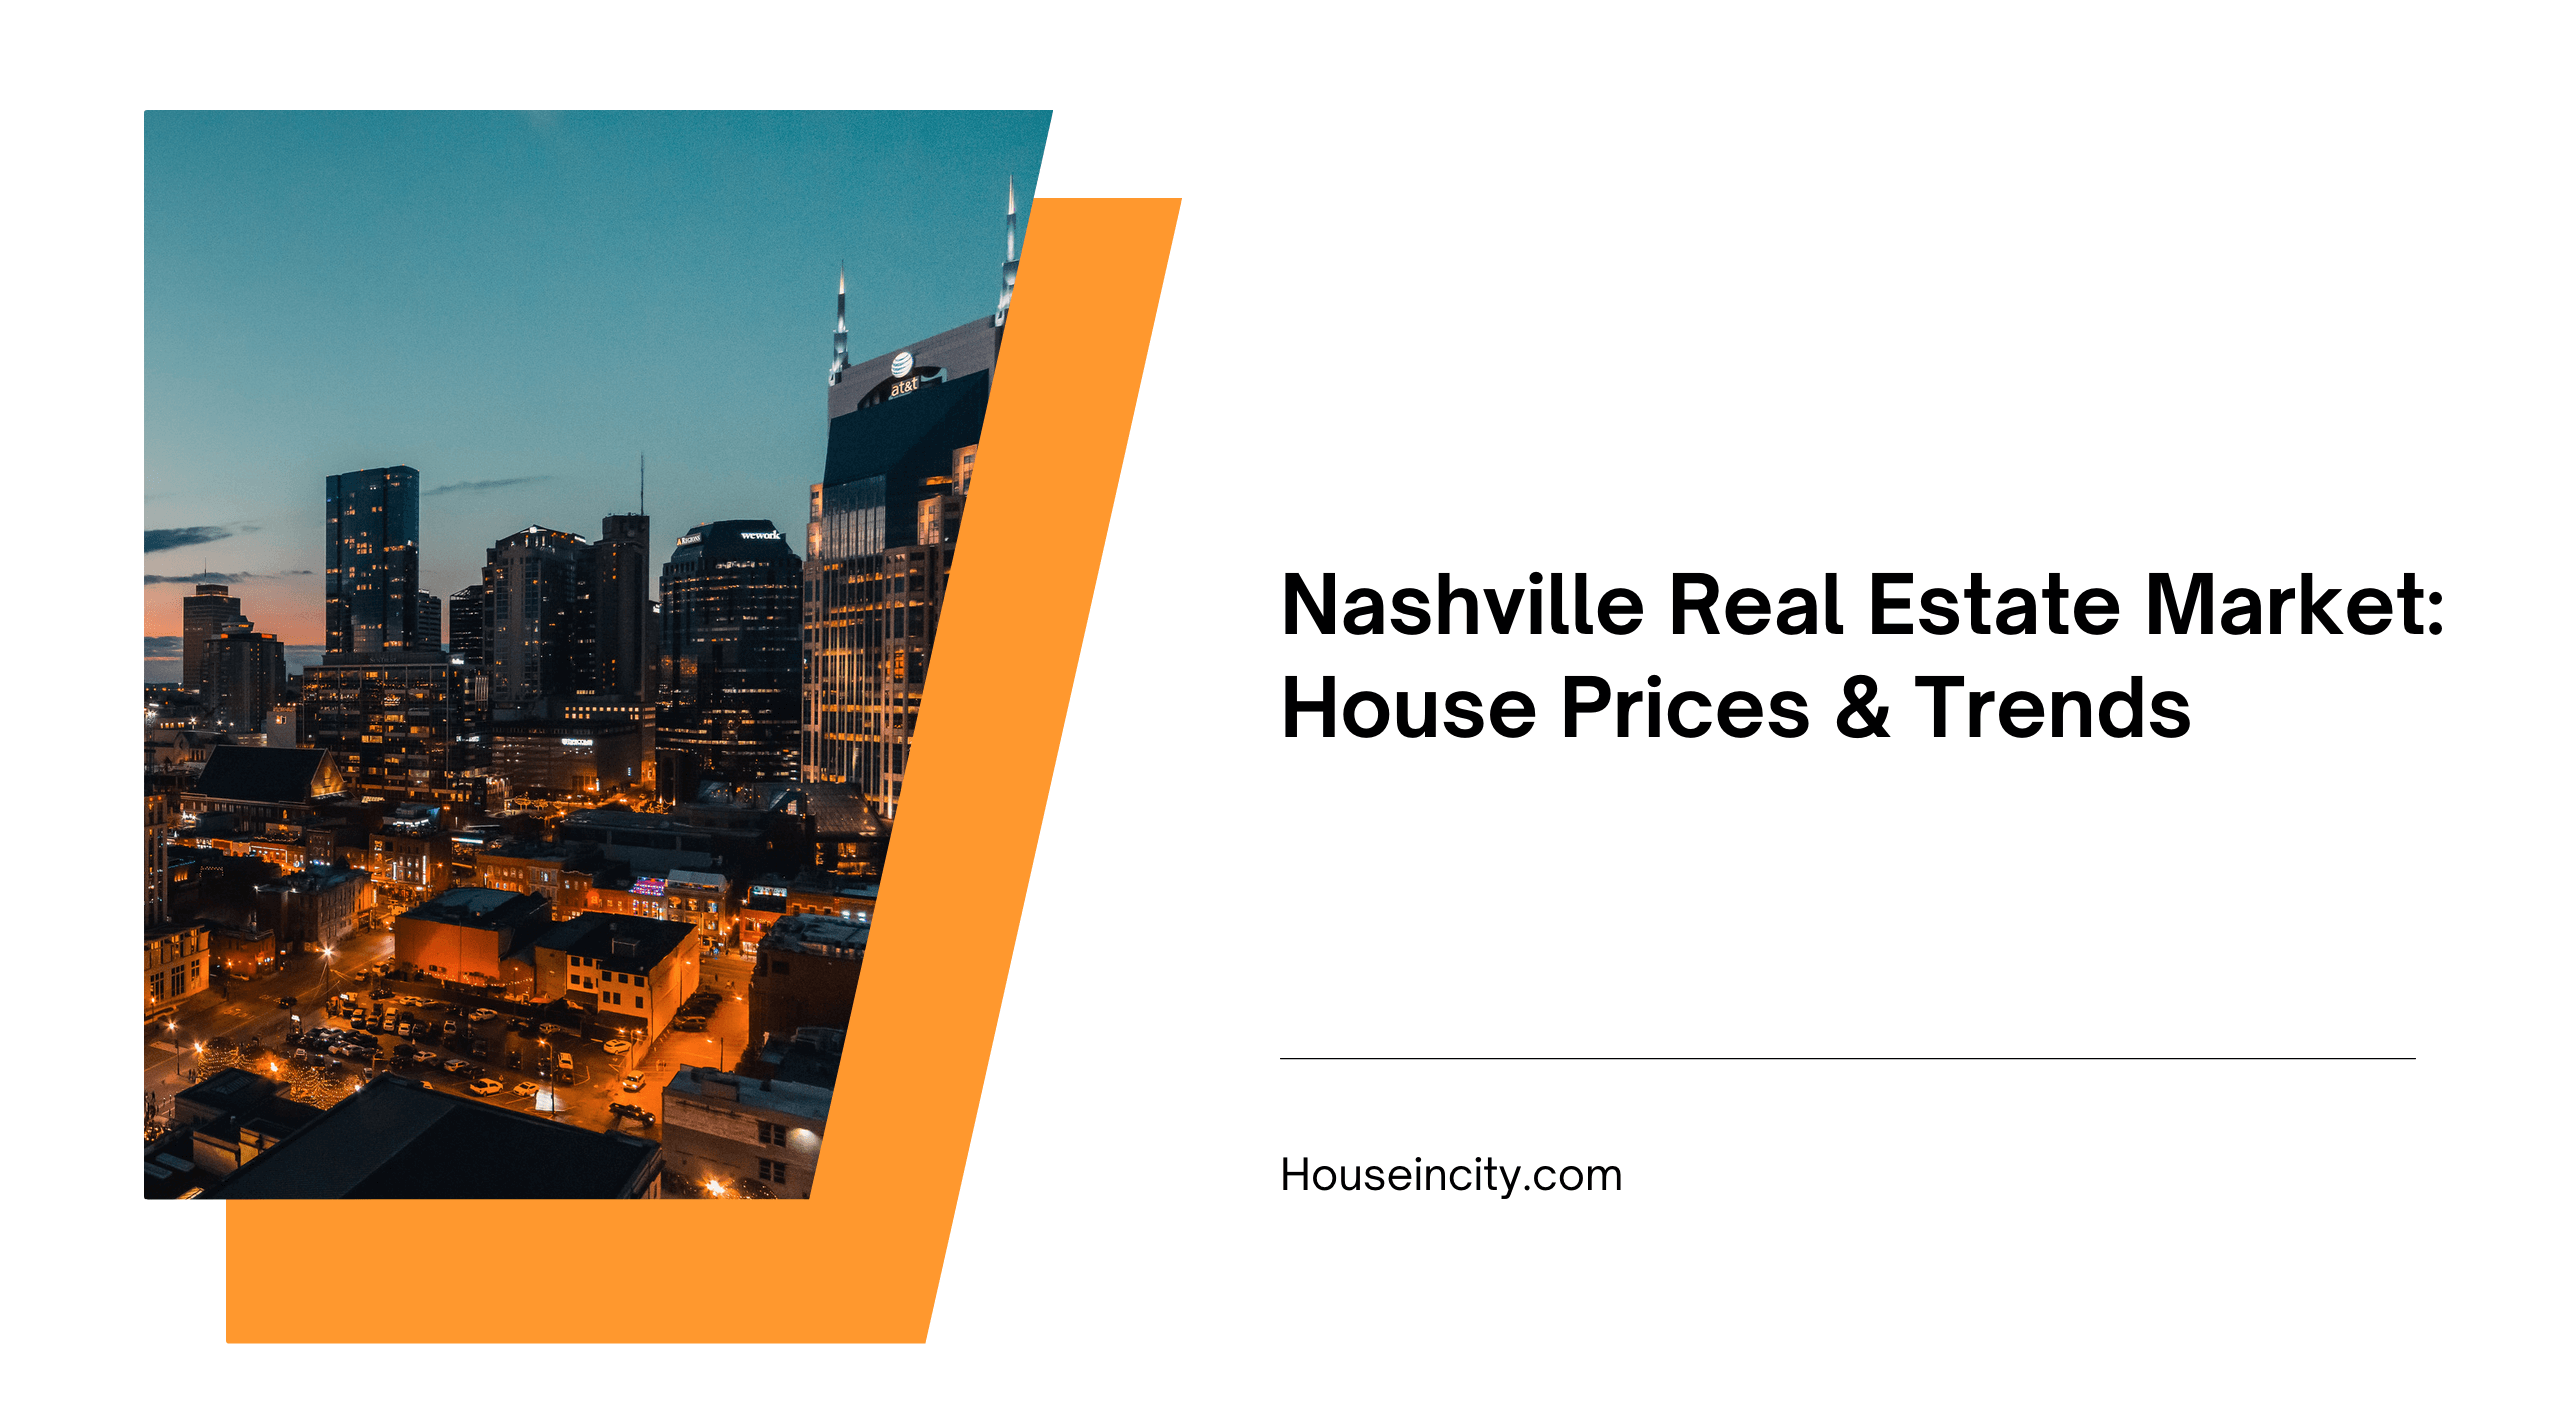 Nashville Real Estate Market: House Prices & Trends